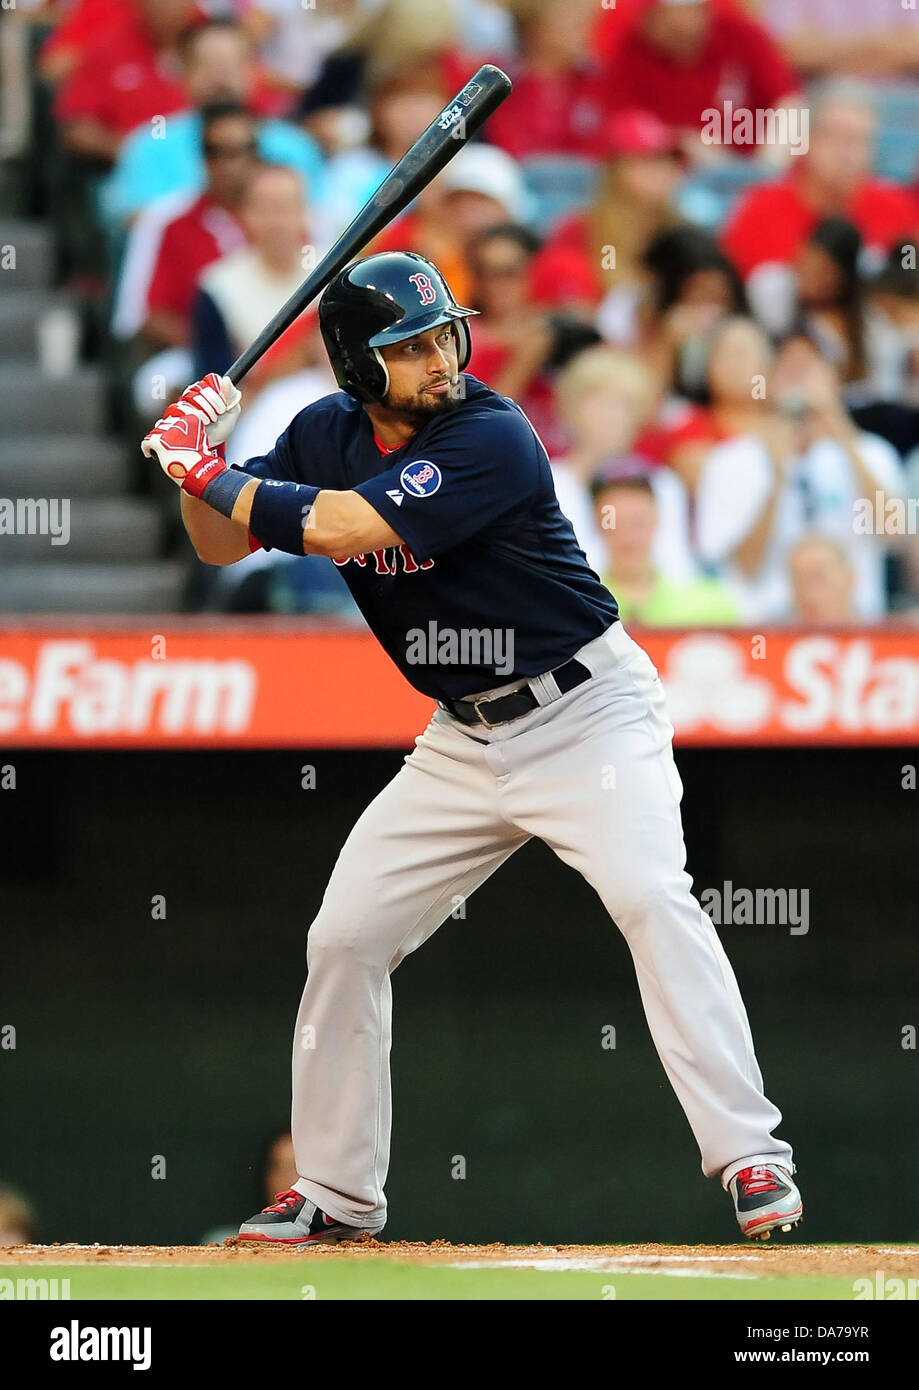 Anaheim, CA.Boston Red Sox right fielder Shane Victorino #18 at